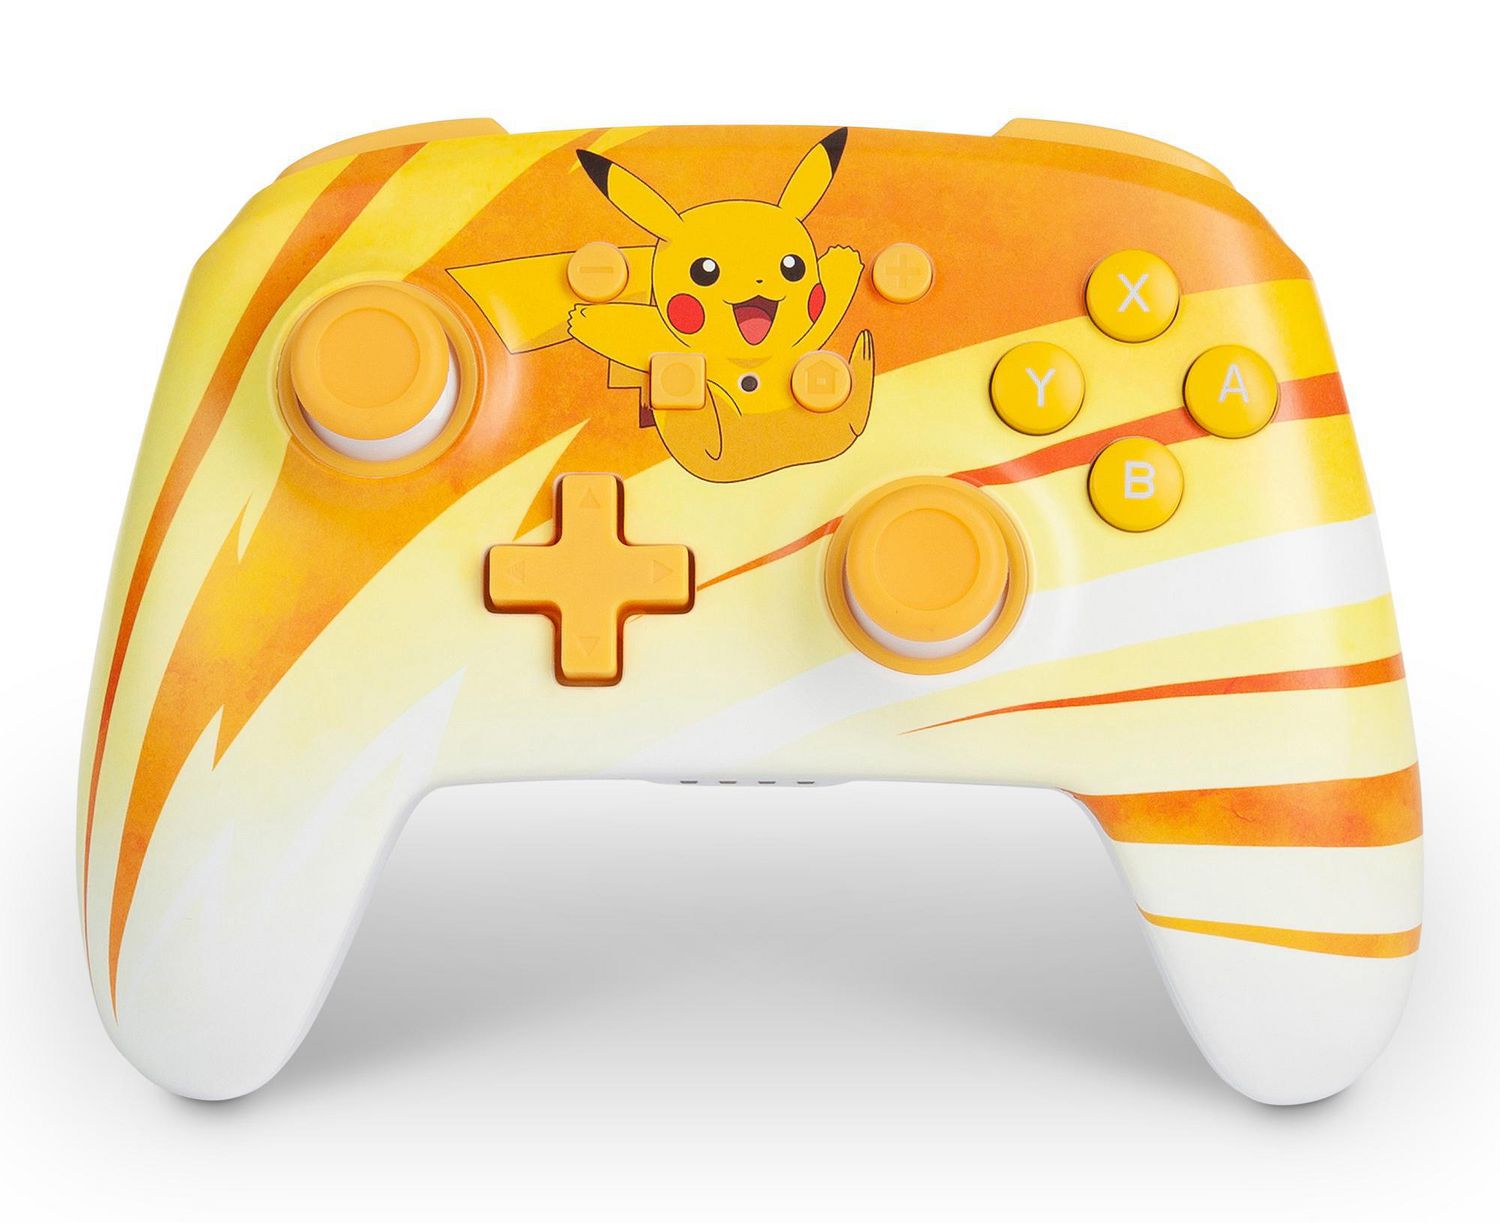 switch pro controller pikachu